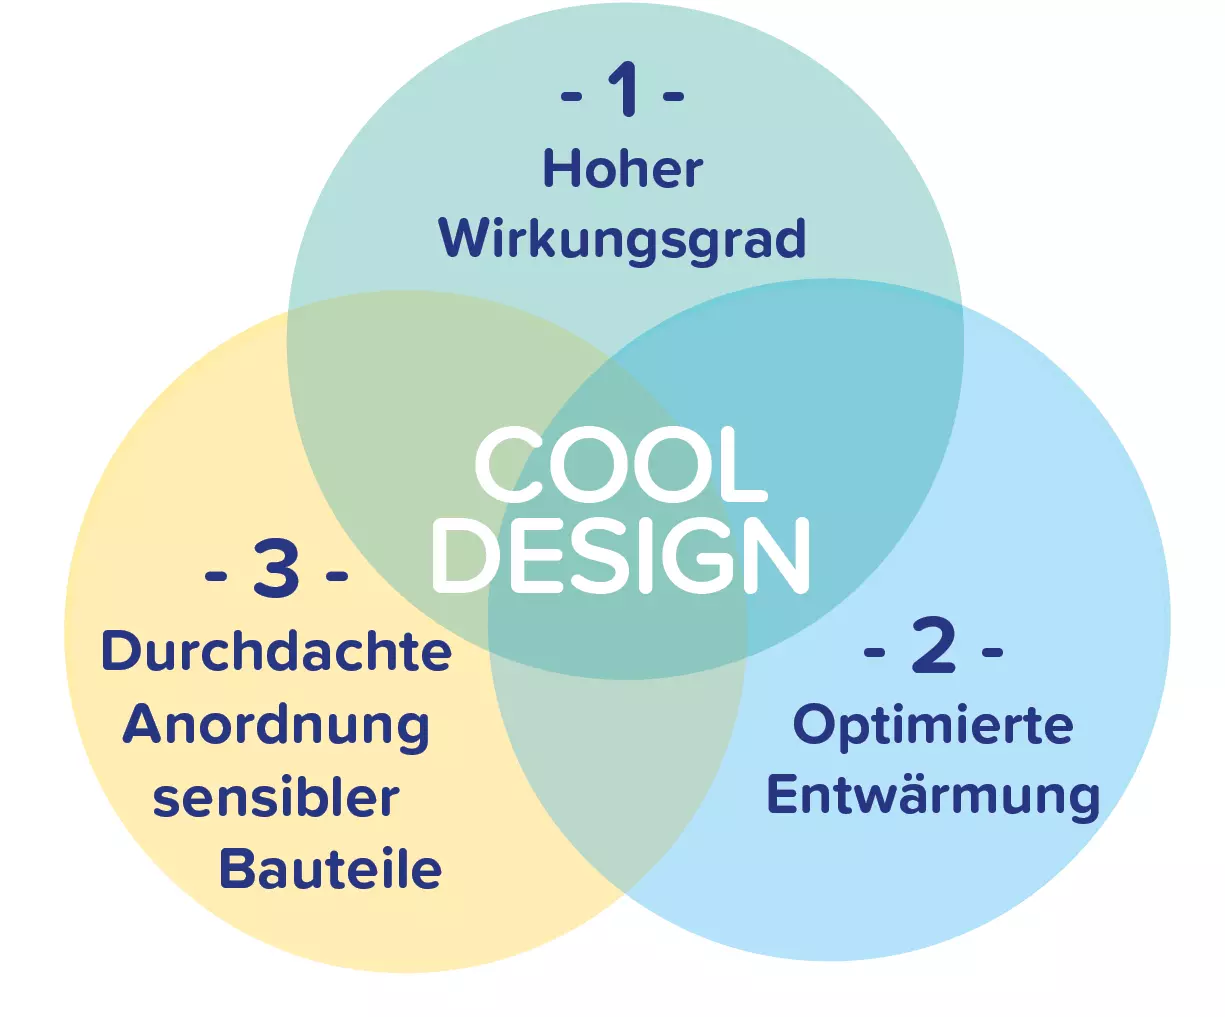 Cool Design = Hoher Wirkungsgrad + Optimierte Entwärmung + Smarte Bauteilanordnung